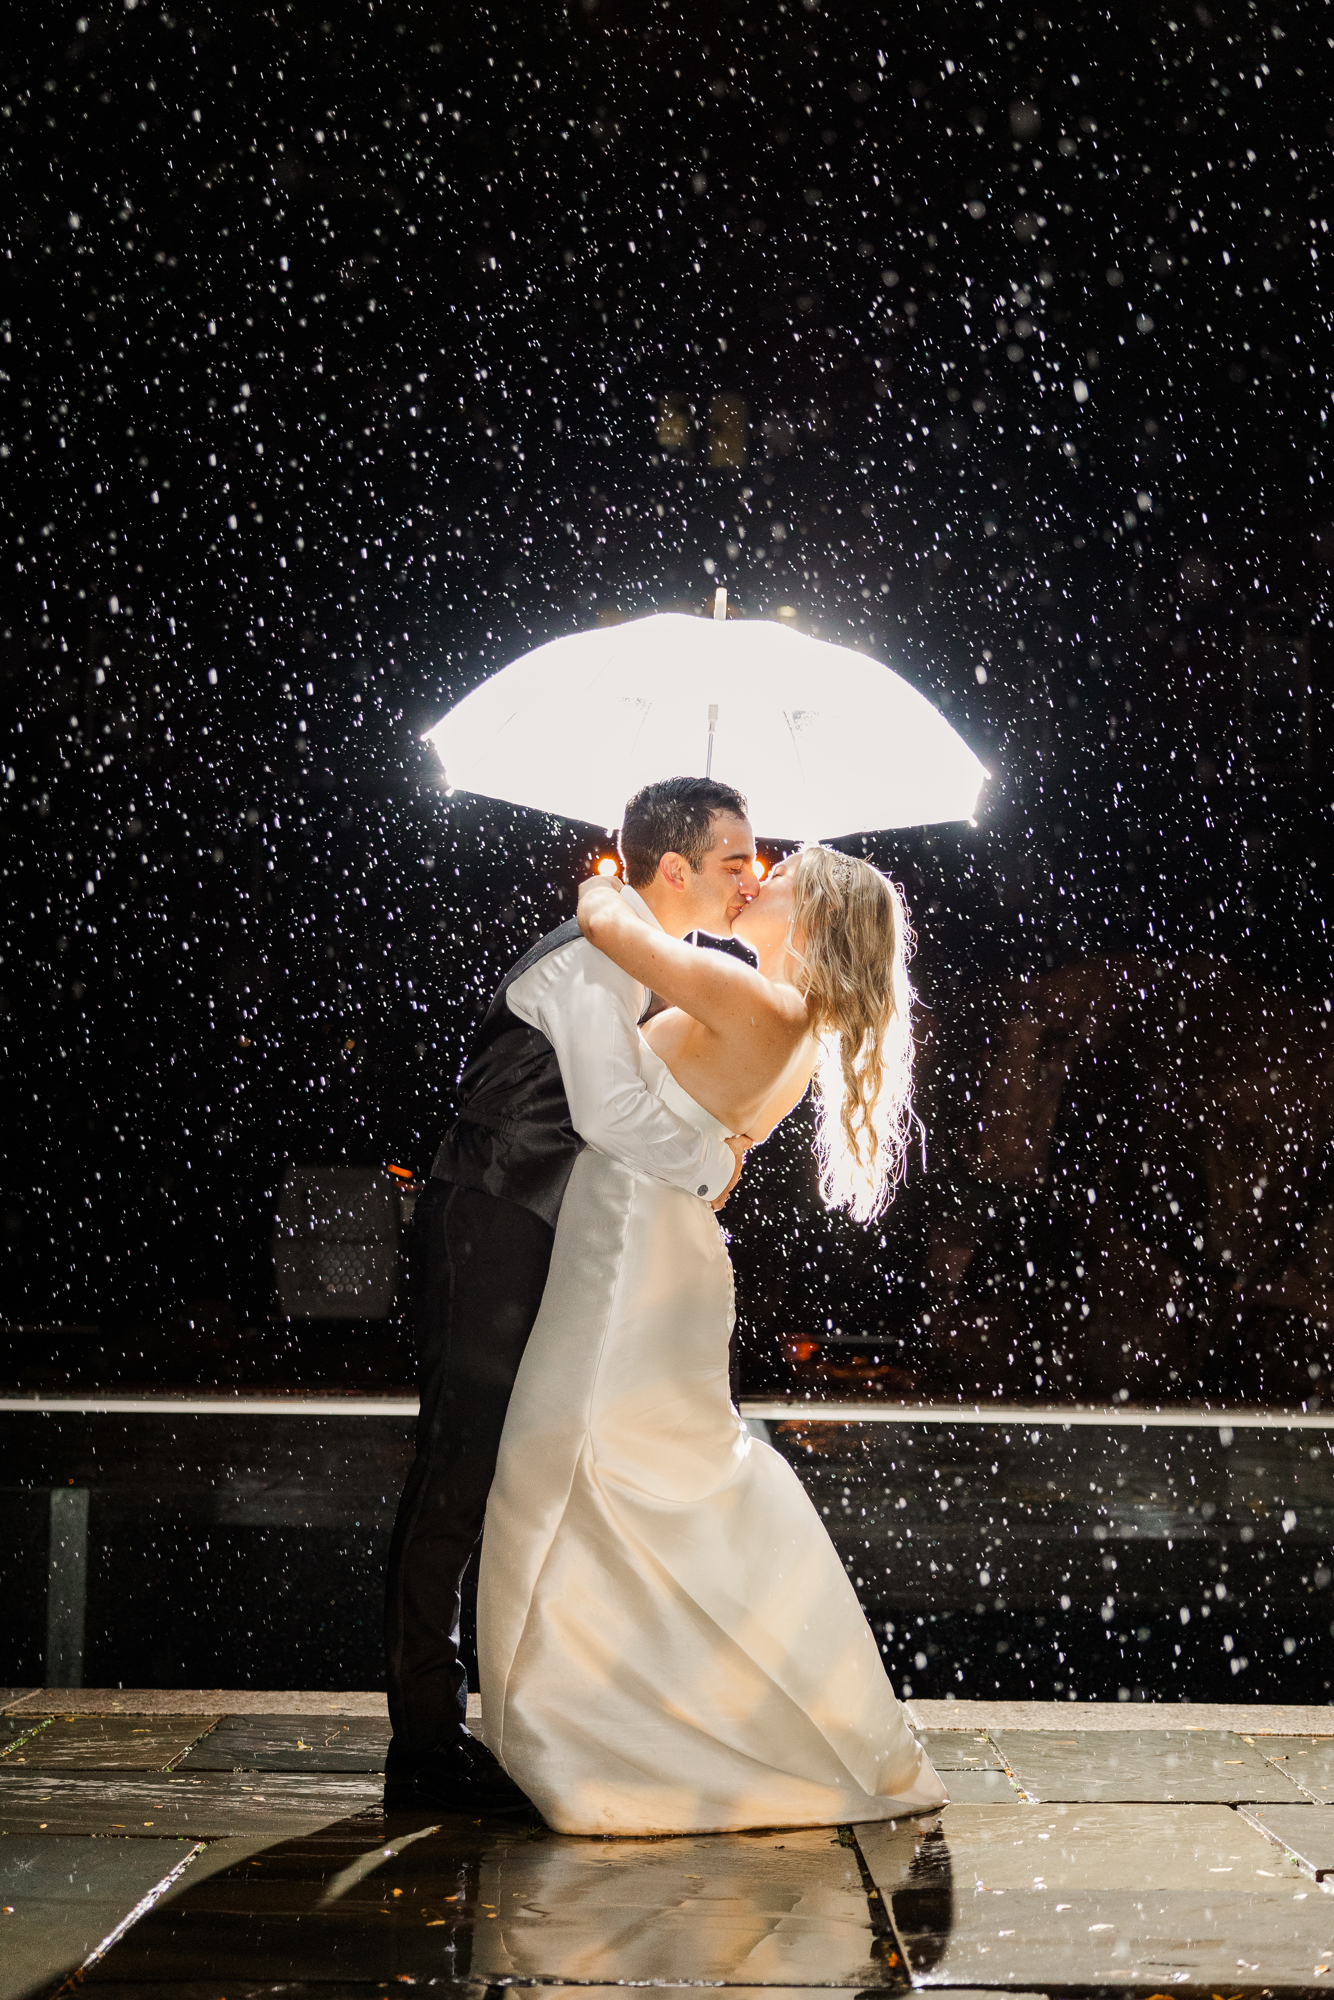 Dazzling Rainy Wedding Photos at Central Park Zoo